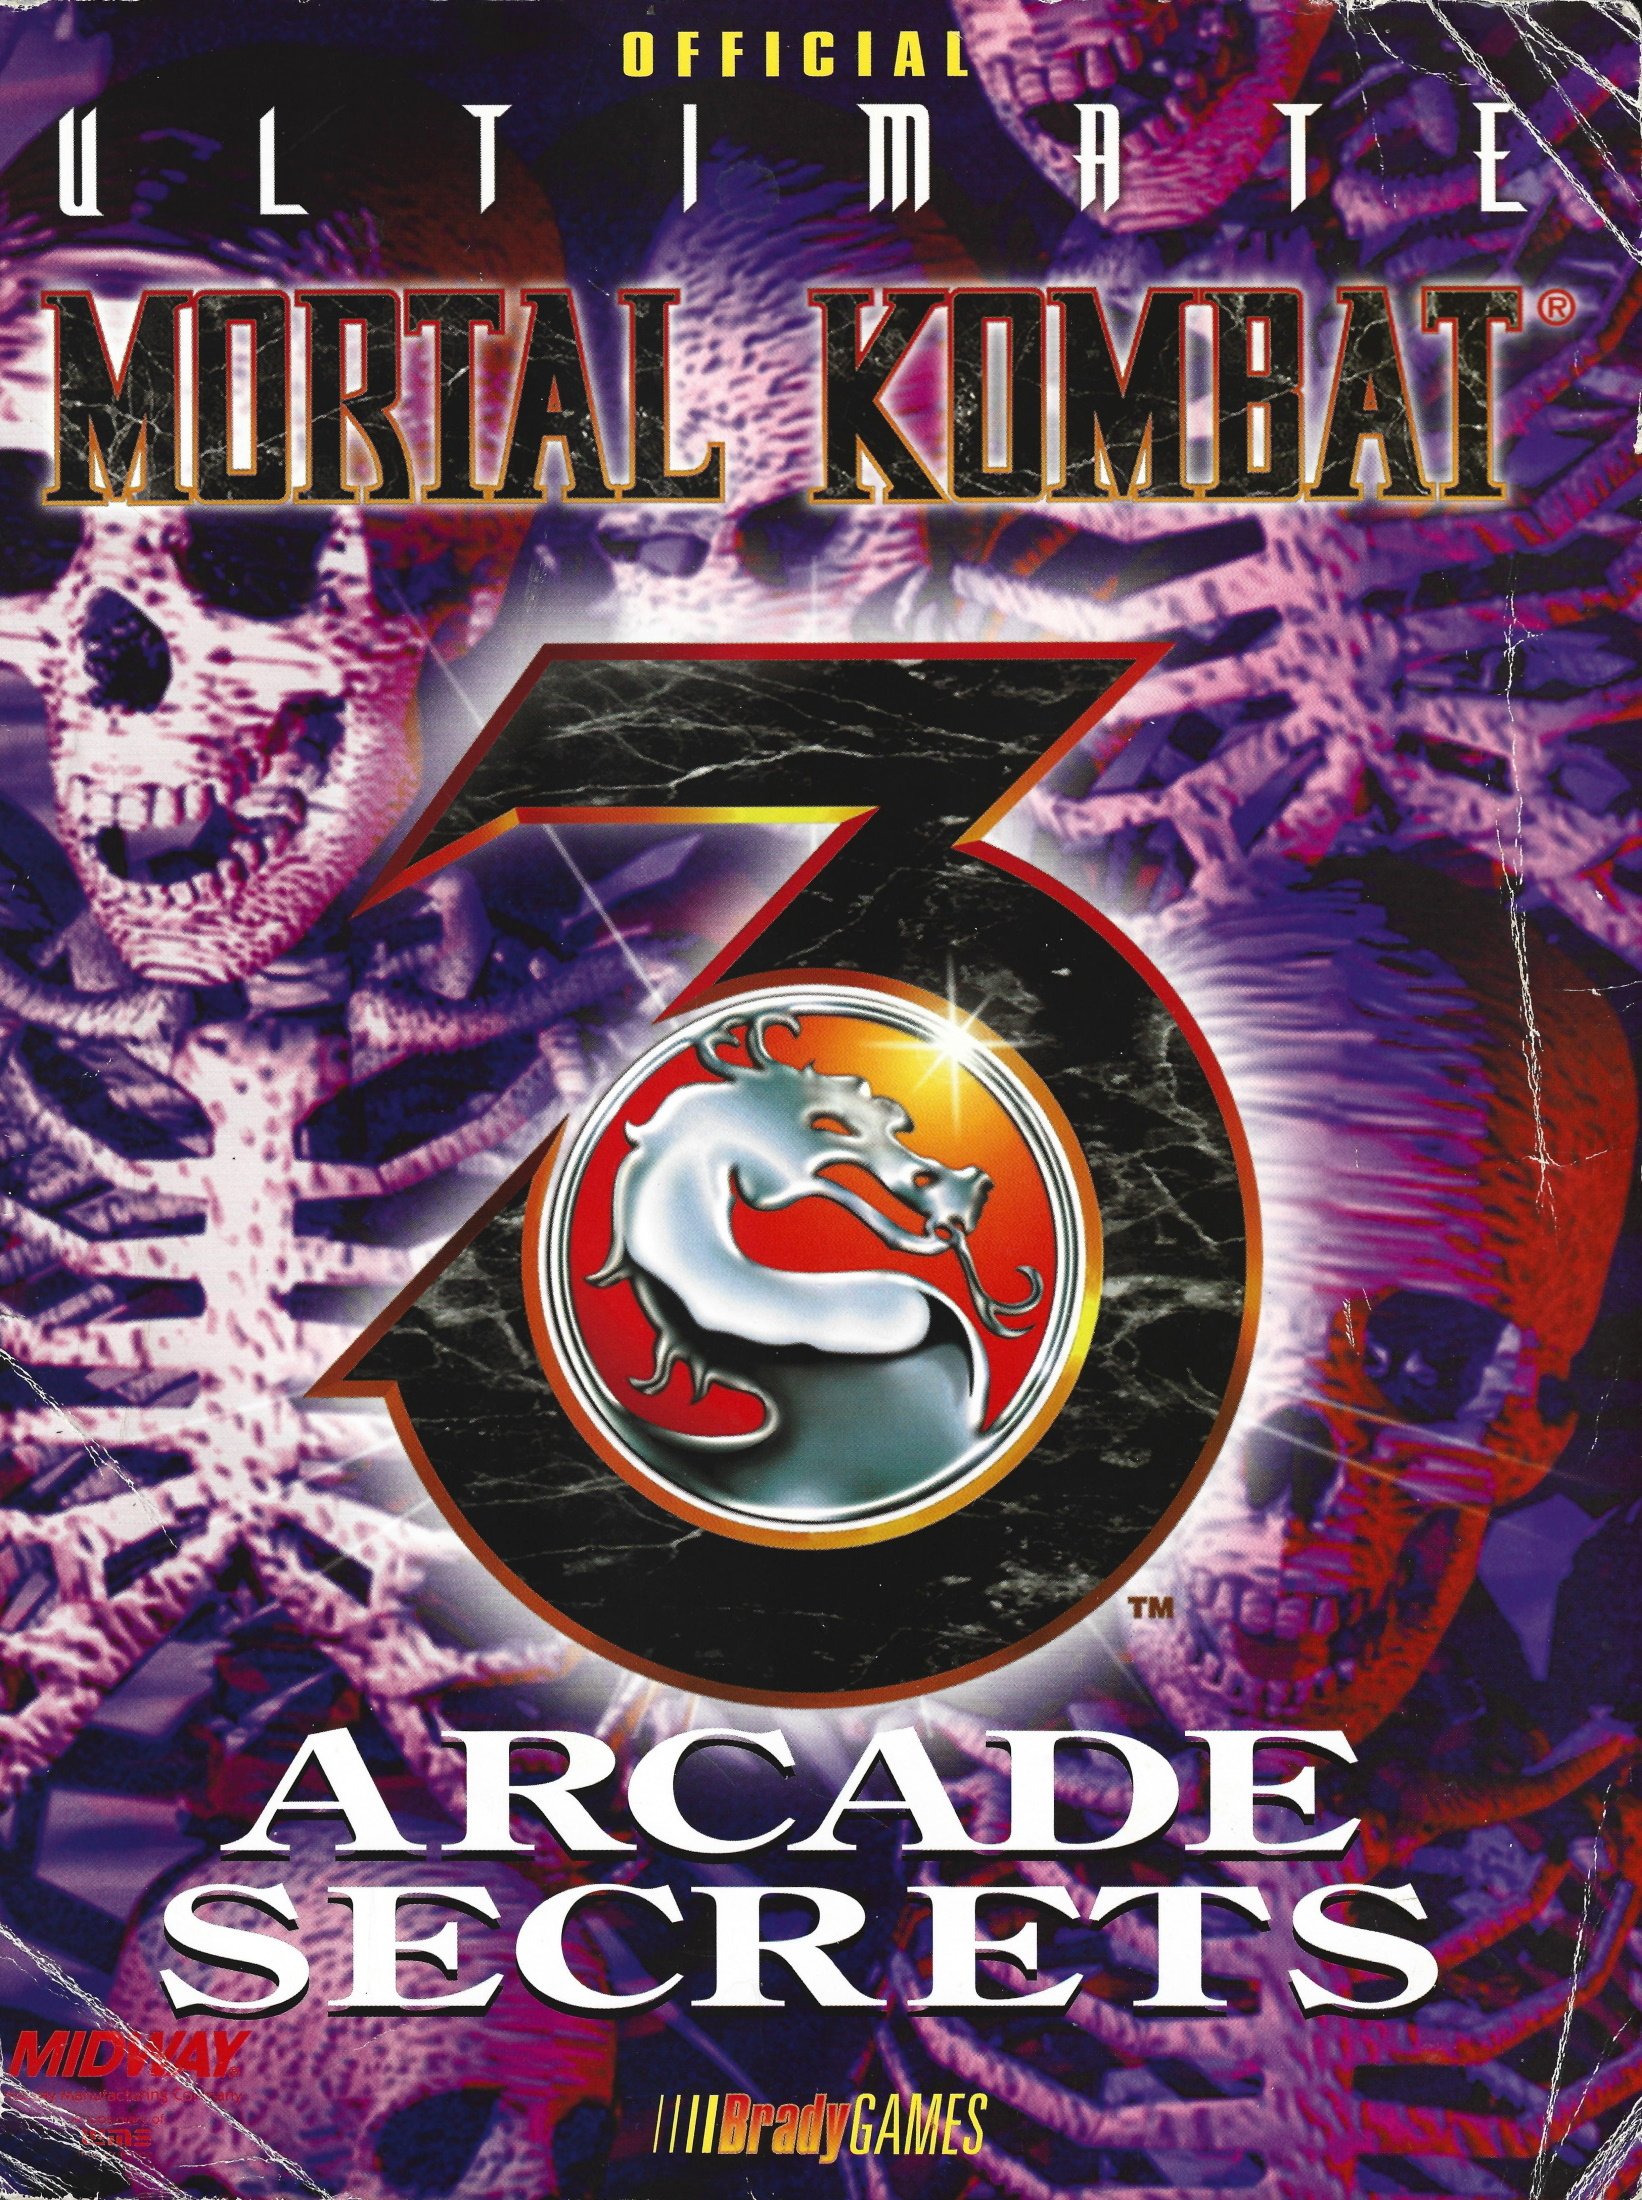 More information about "Official Ultimate Mortal Kombat 3 Arcade Secrets"